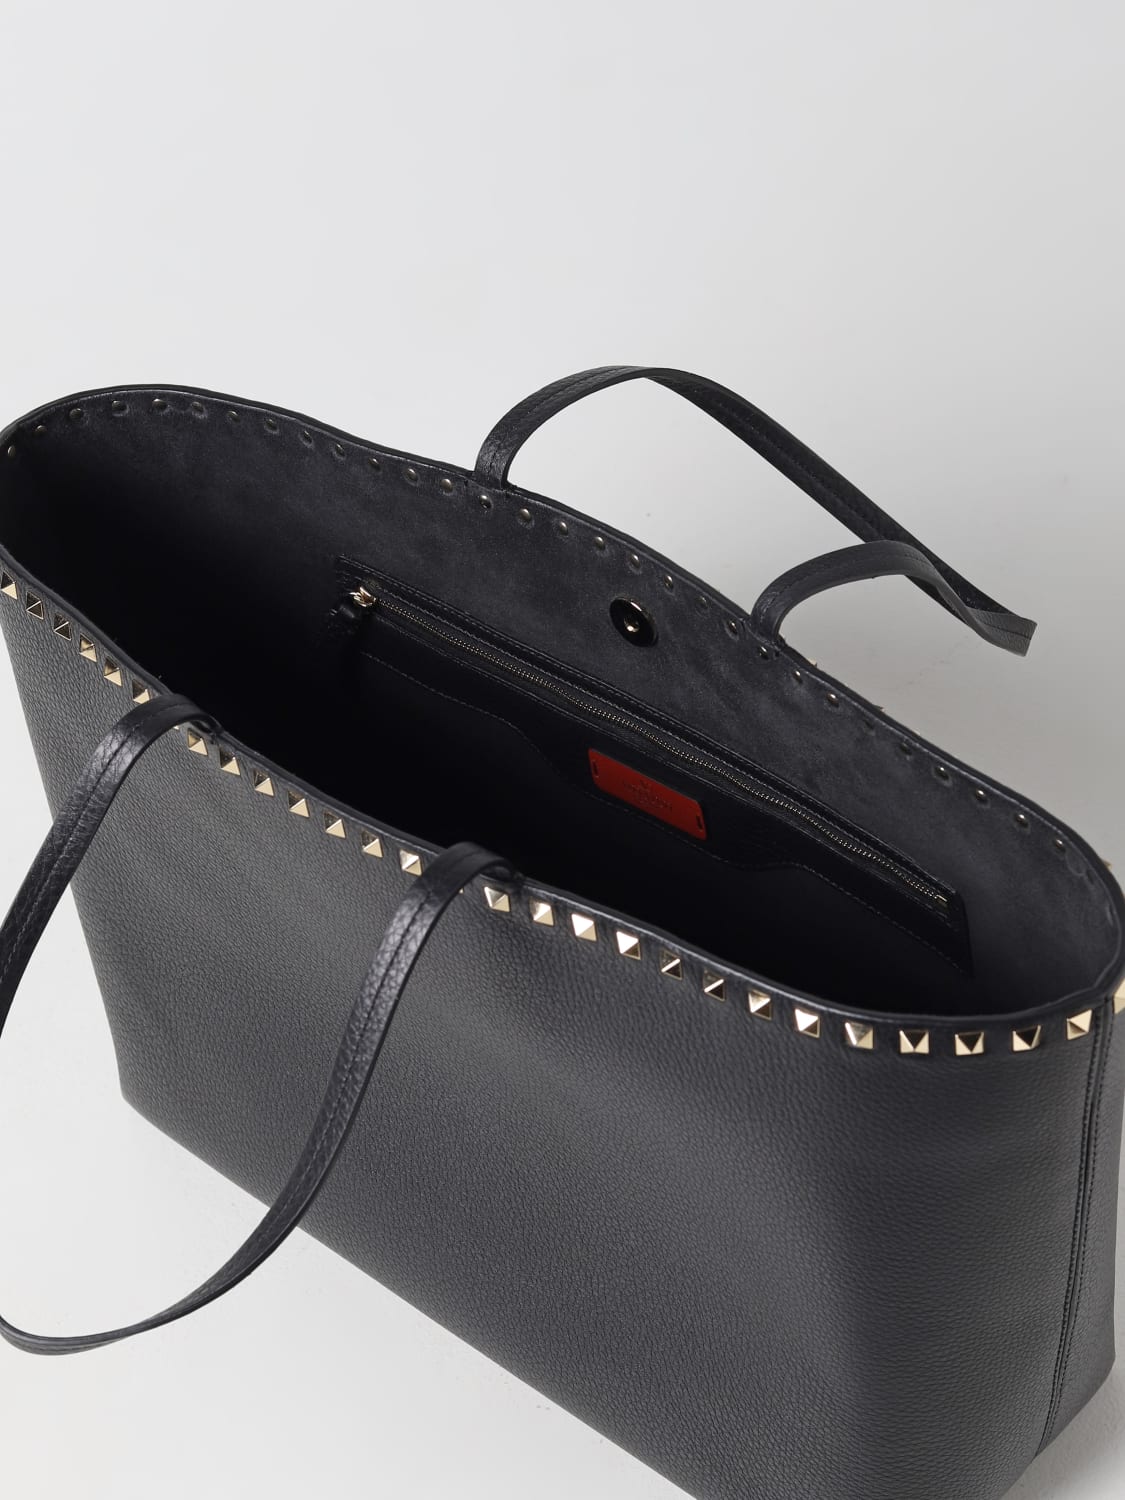 Valentino Garavani Black leather Rockstud tote bag